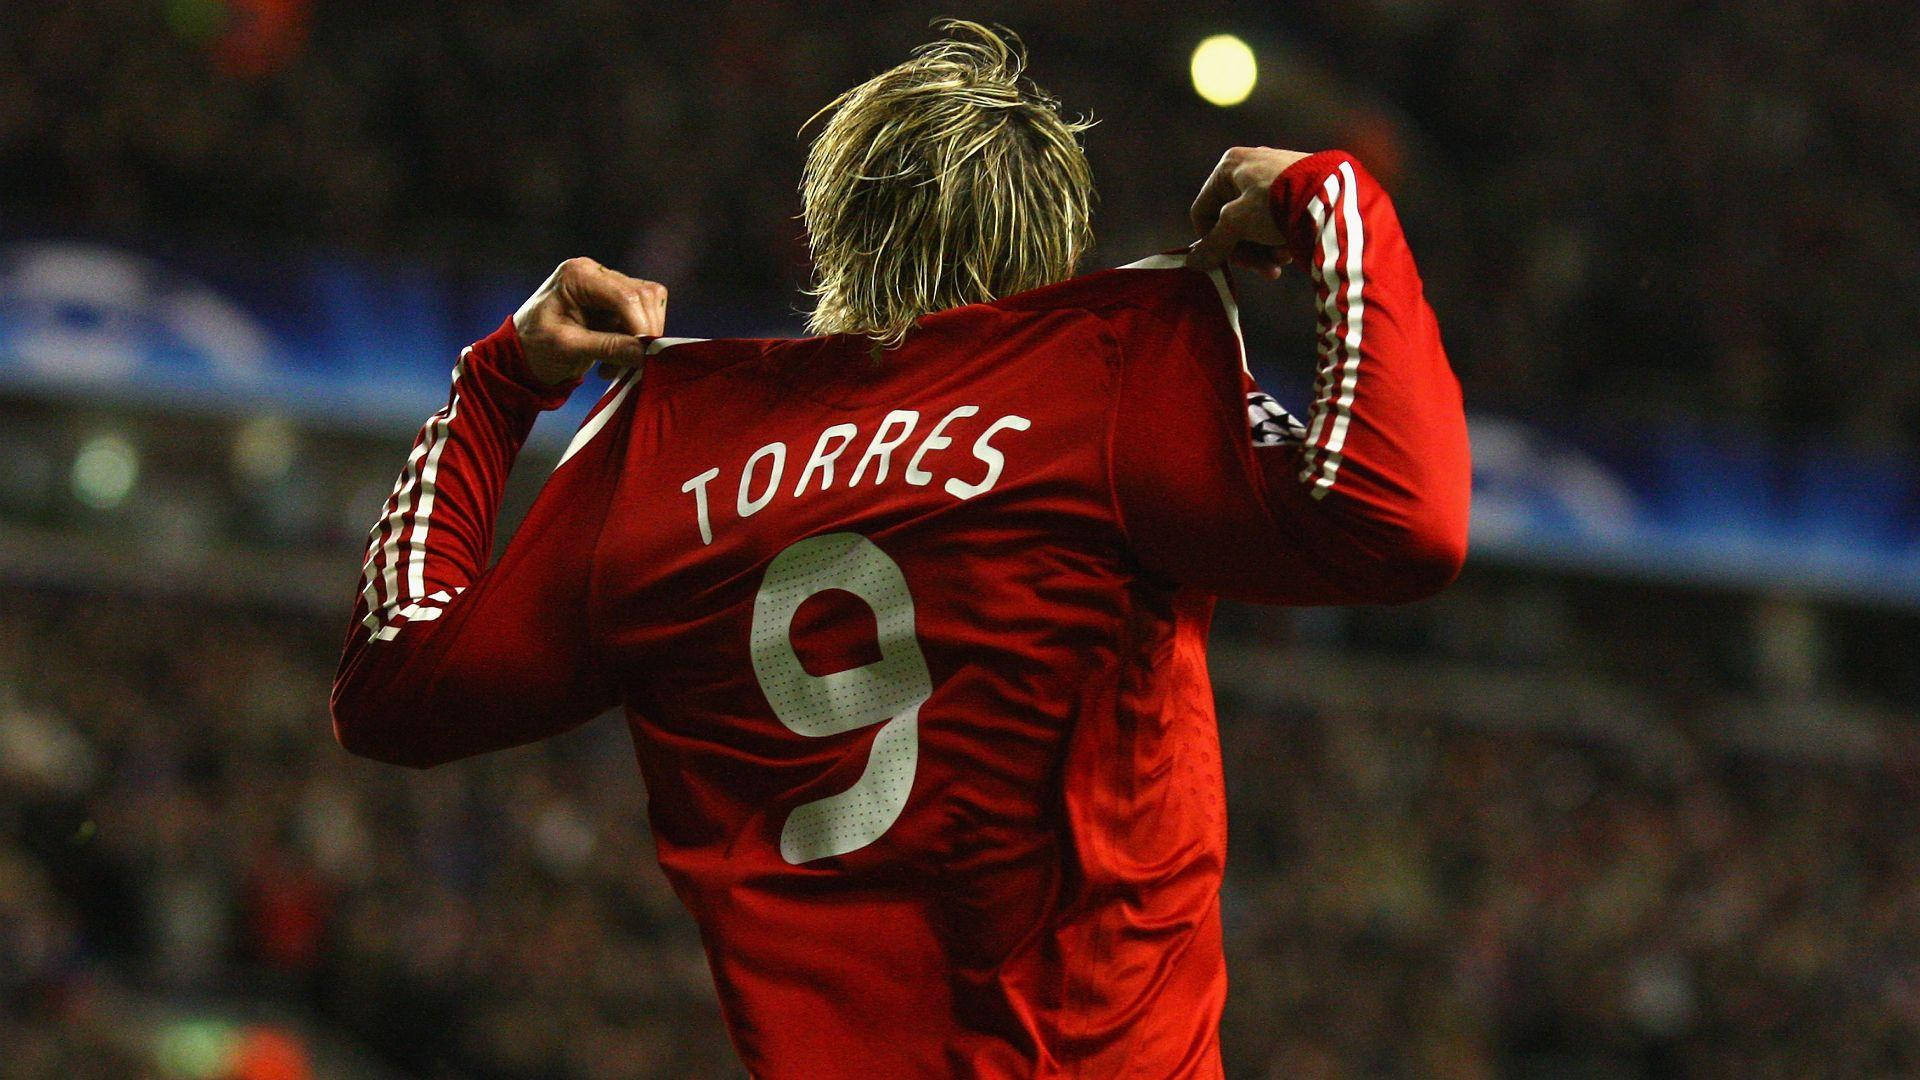 Fernando Torres Showing His Jersey Background